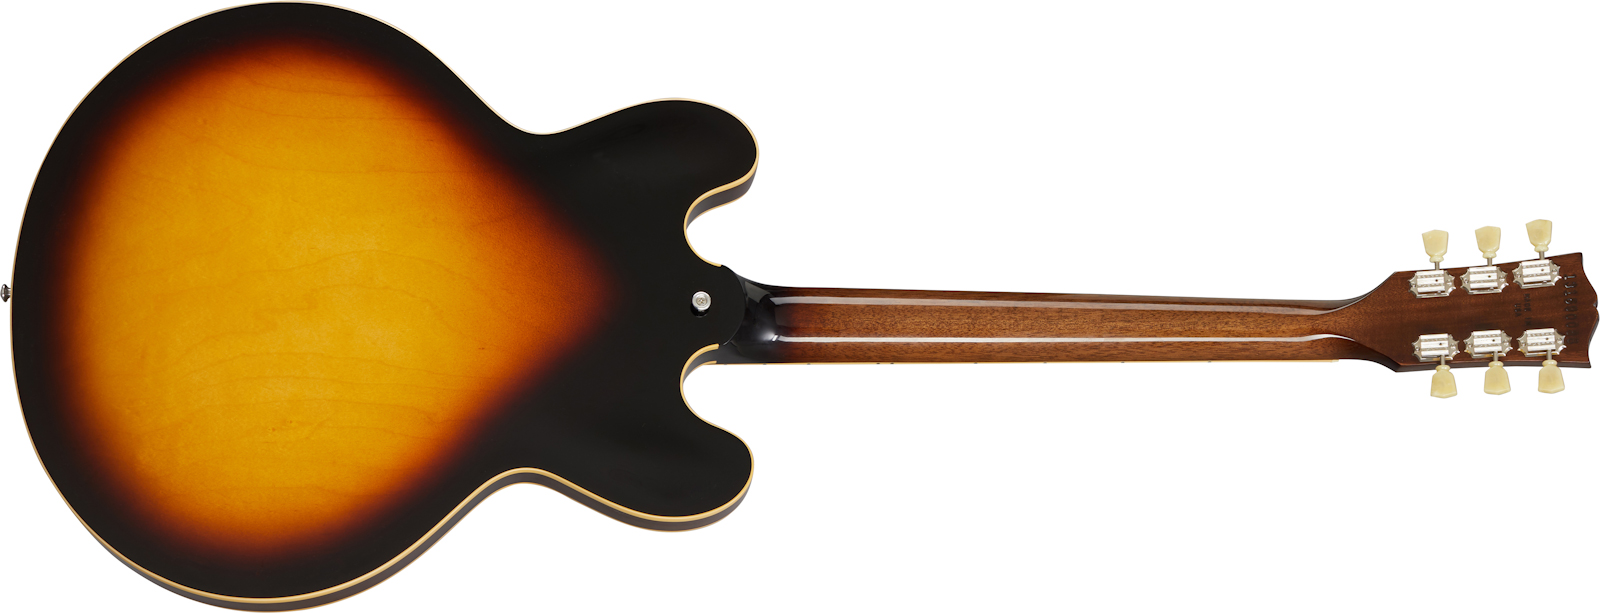 Gibson Es-335 Dot Original 2020 2h Ht Rw - Vintage Burst - Semi hollow elektriche gitaar - Variation 1